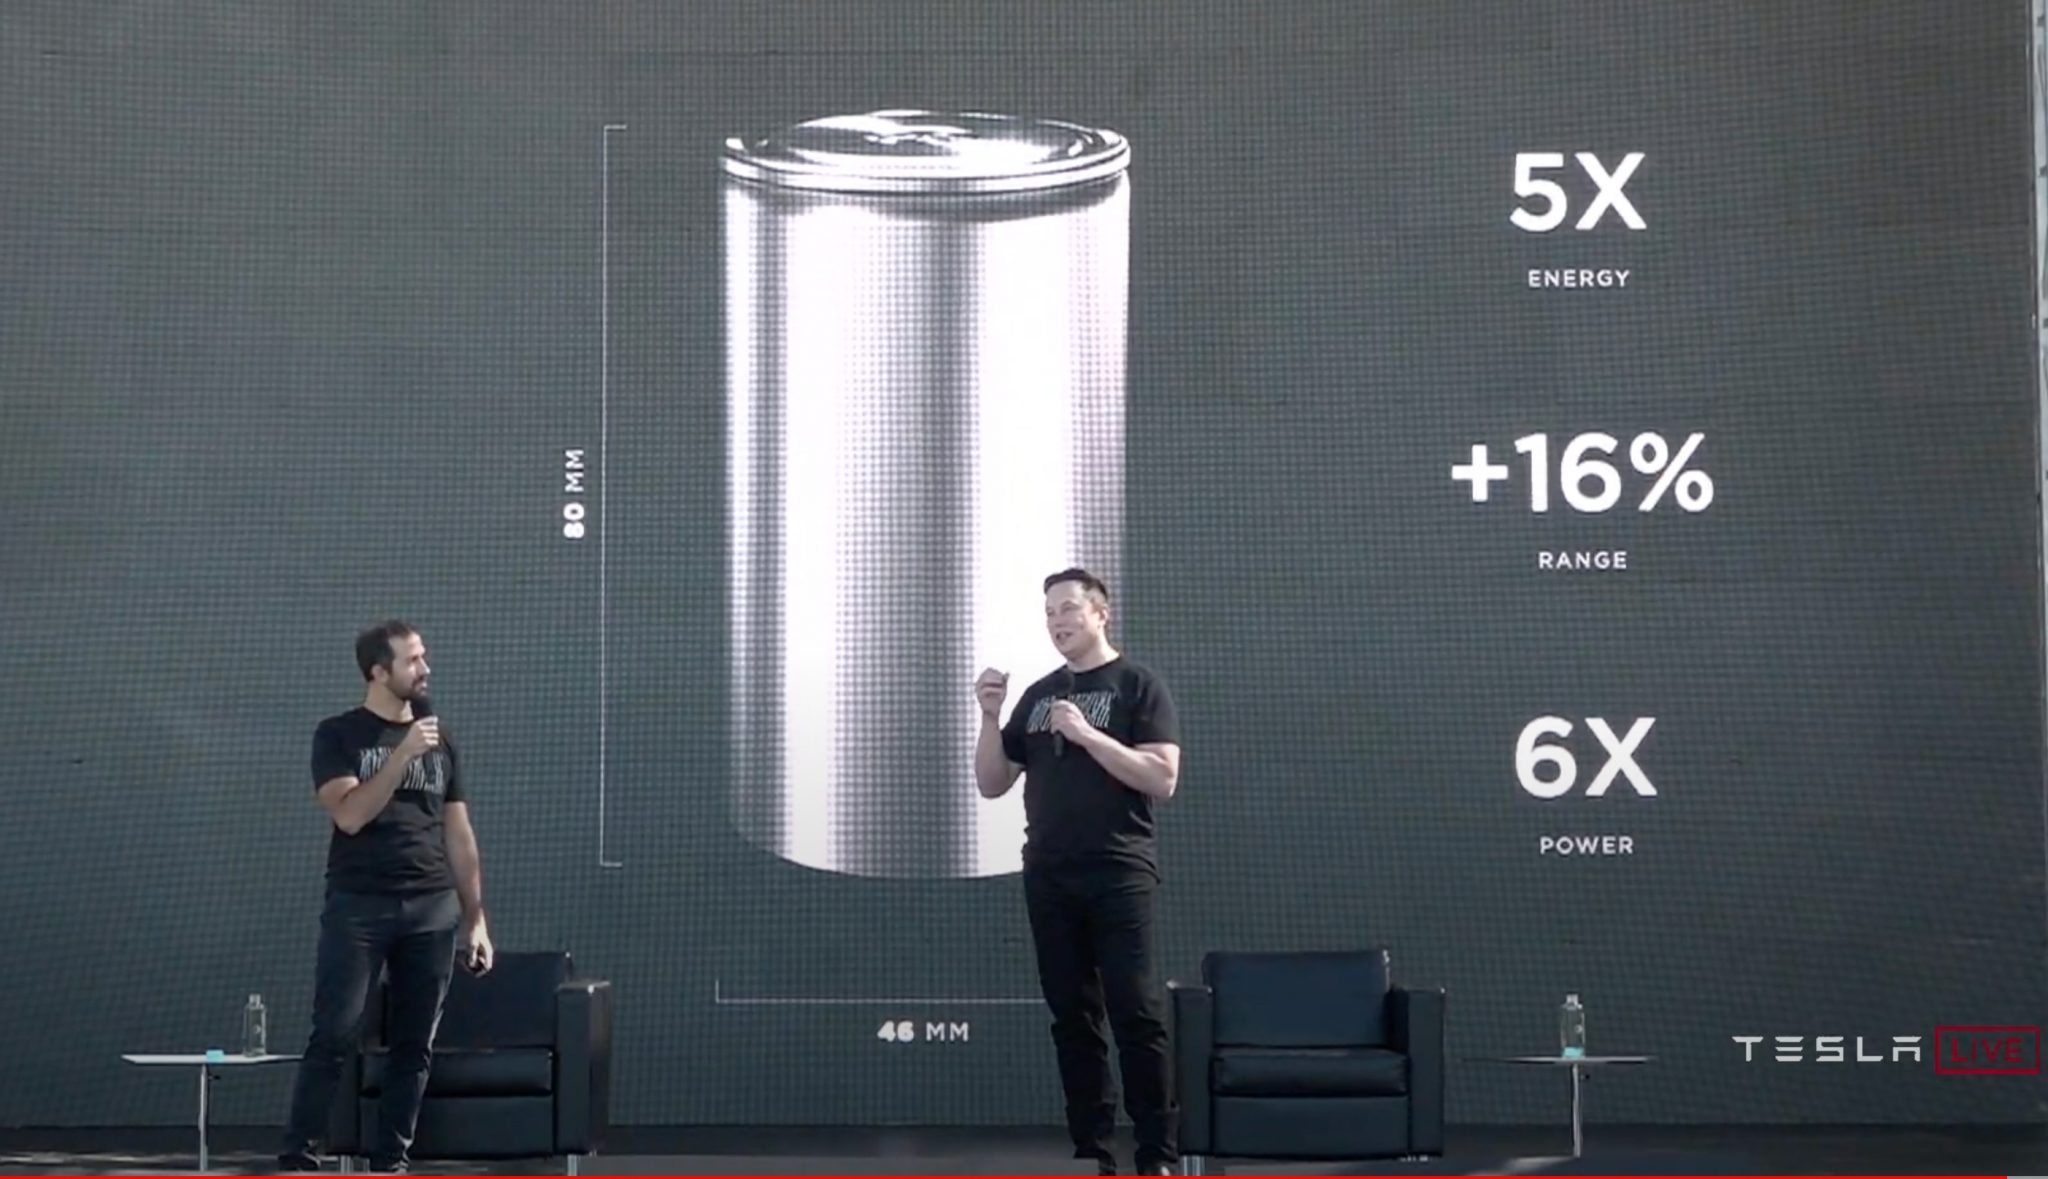 Tesla debuts new 4680 battery cell: 500% more energy, 6X power, range